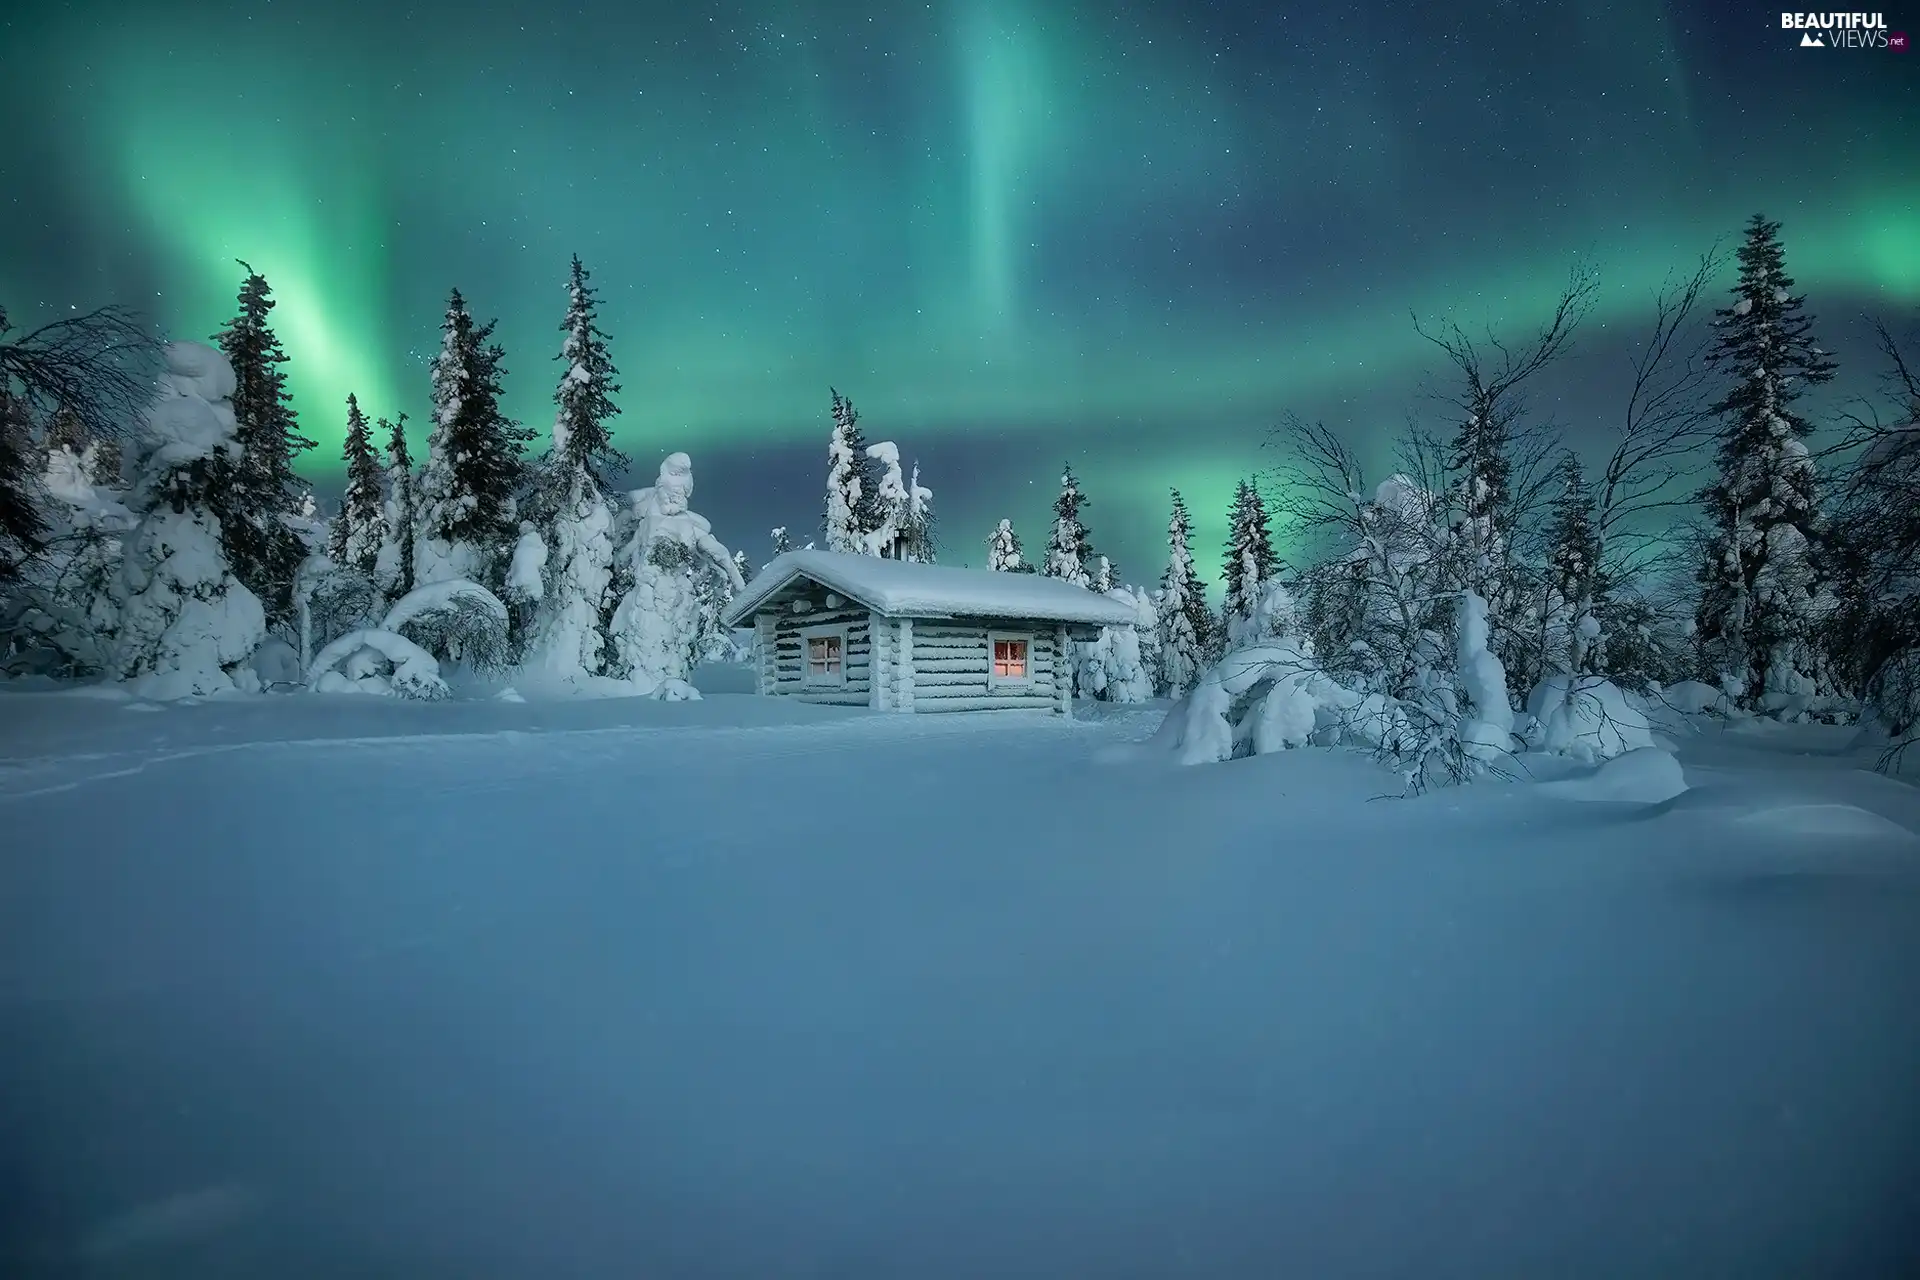 trees, viewes, aurora polaris, Home, winter